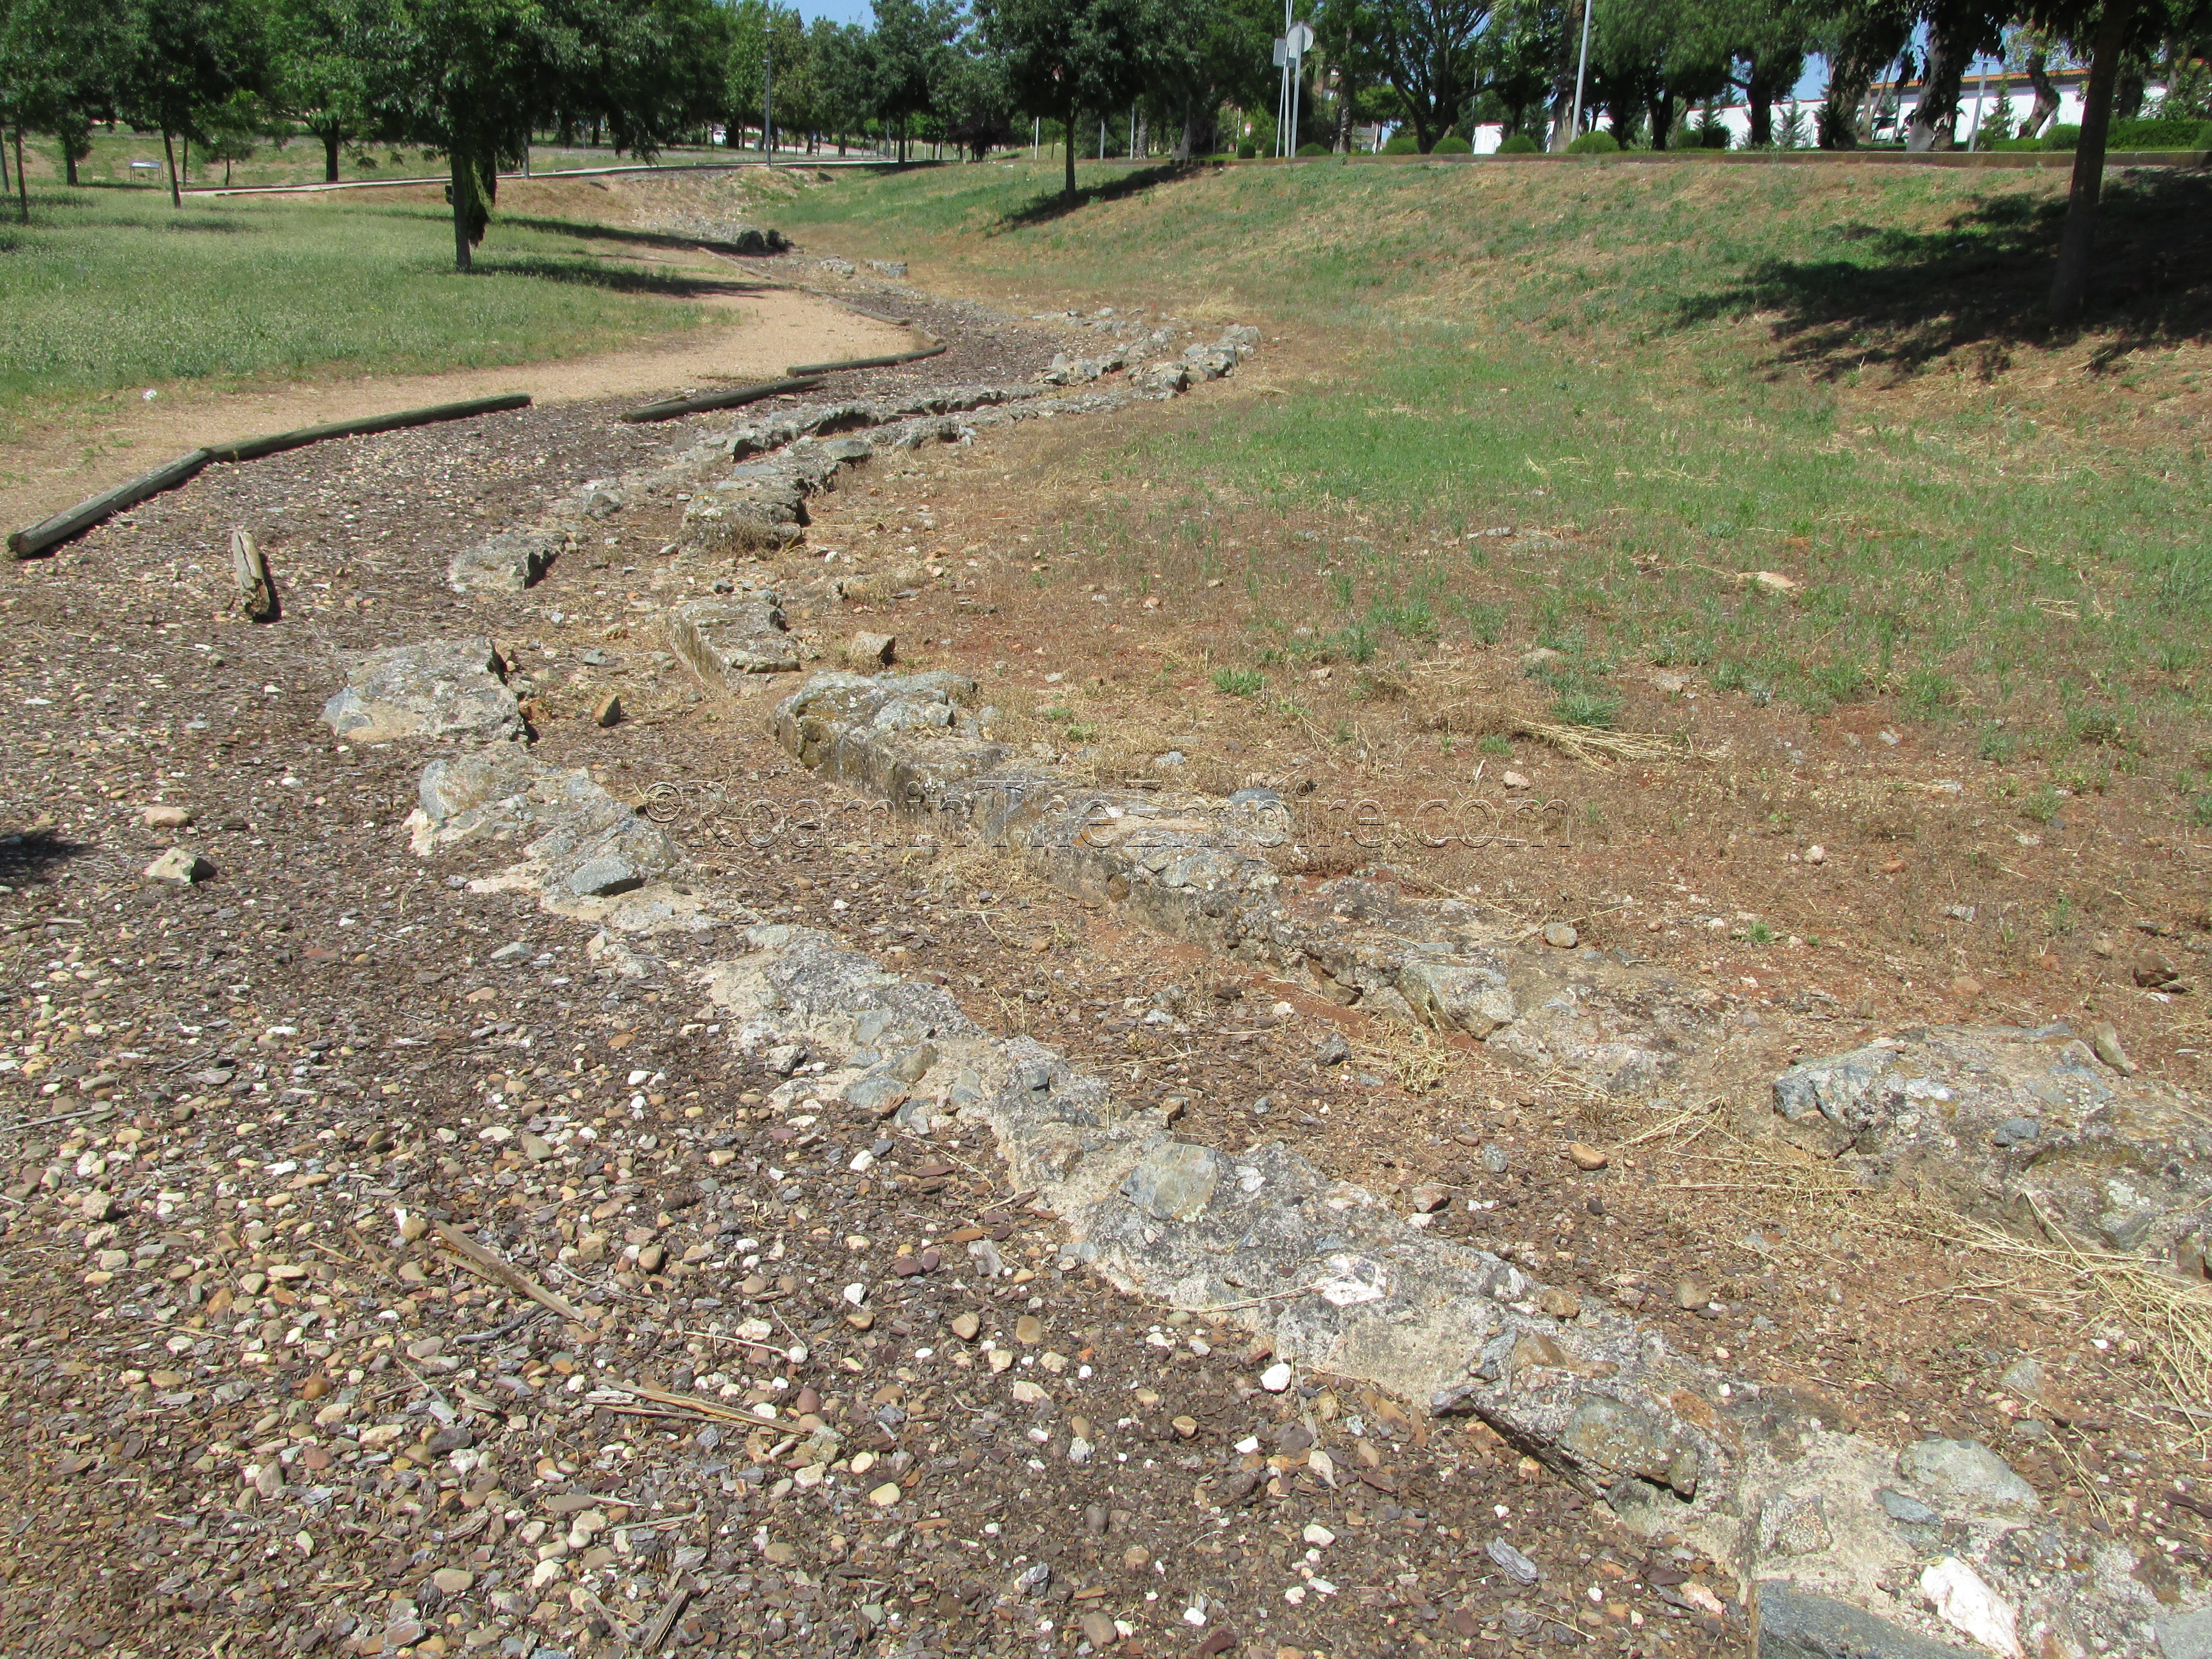 Course of the Proserpina Aqueduct through a park.